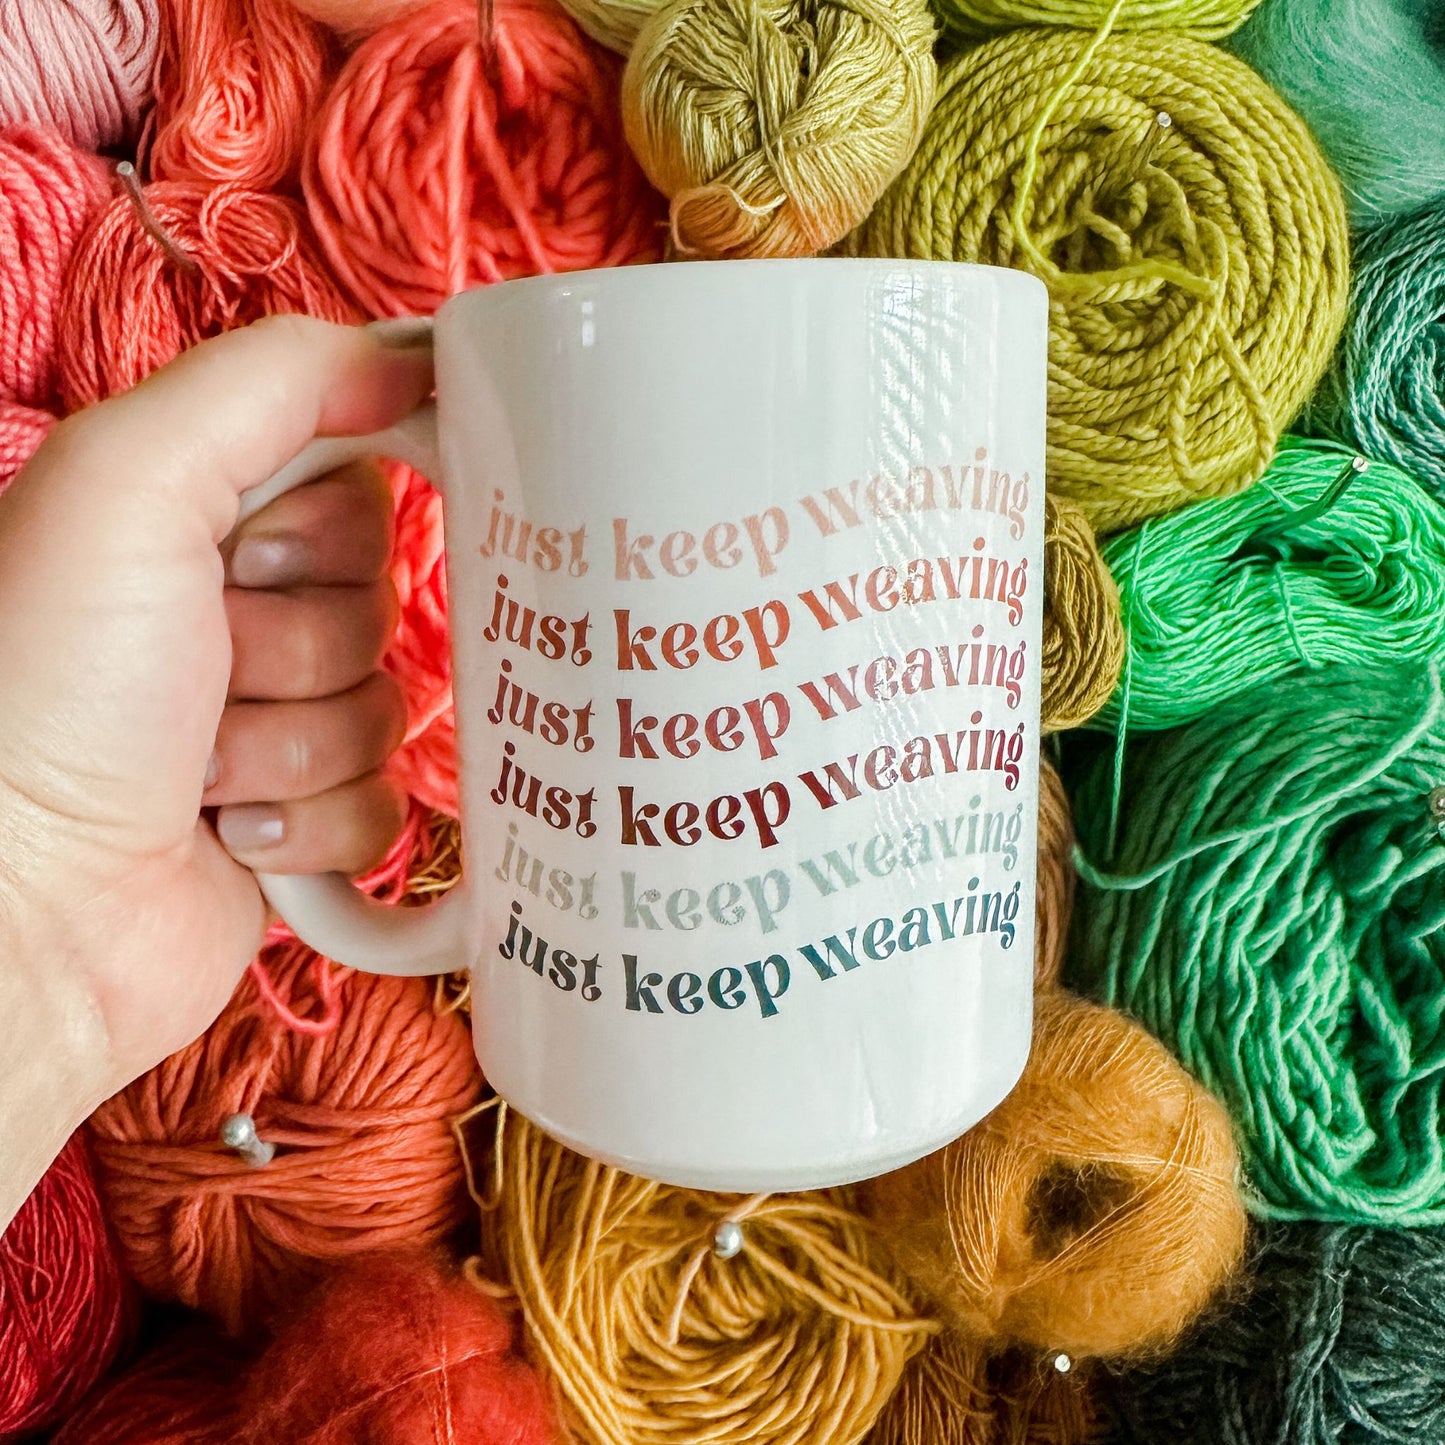 just keep weaving mug - wear and woven